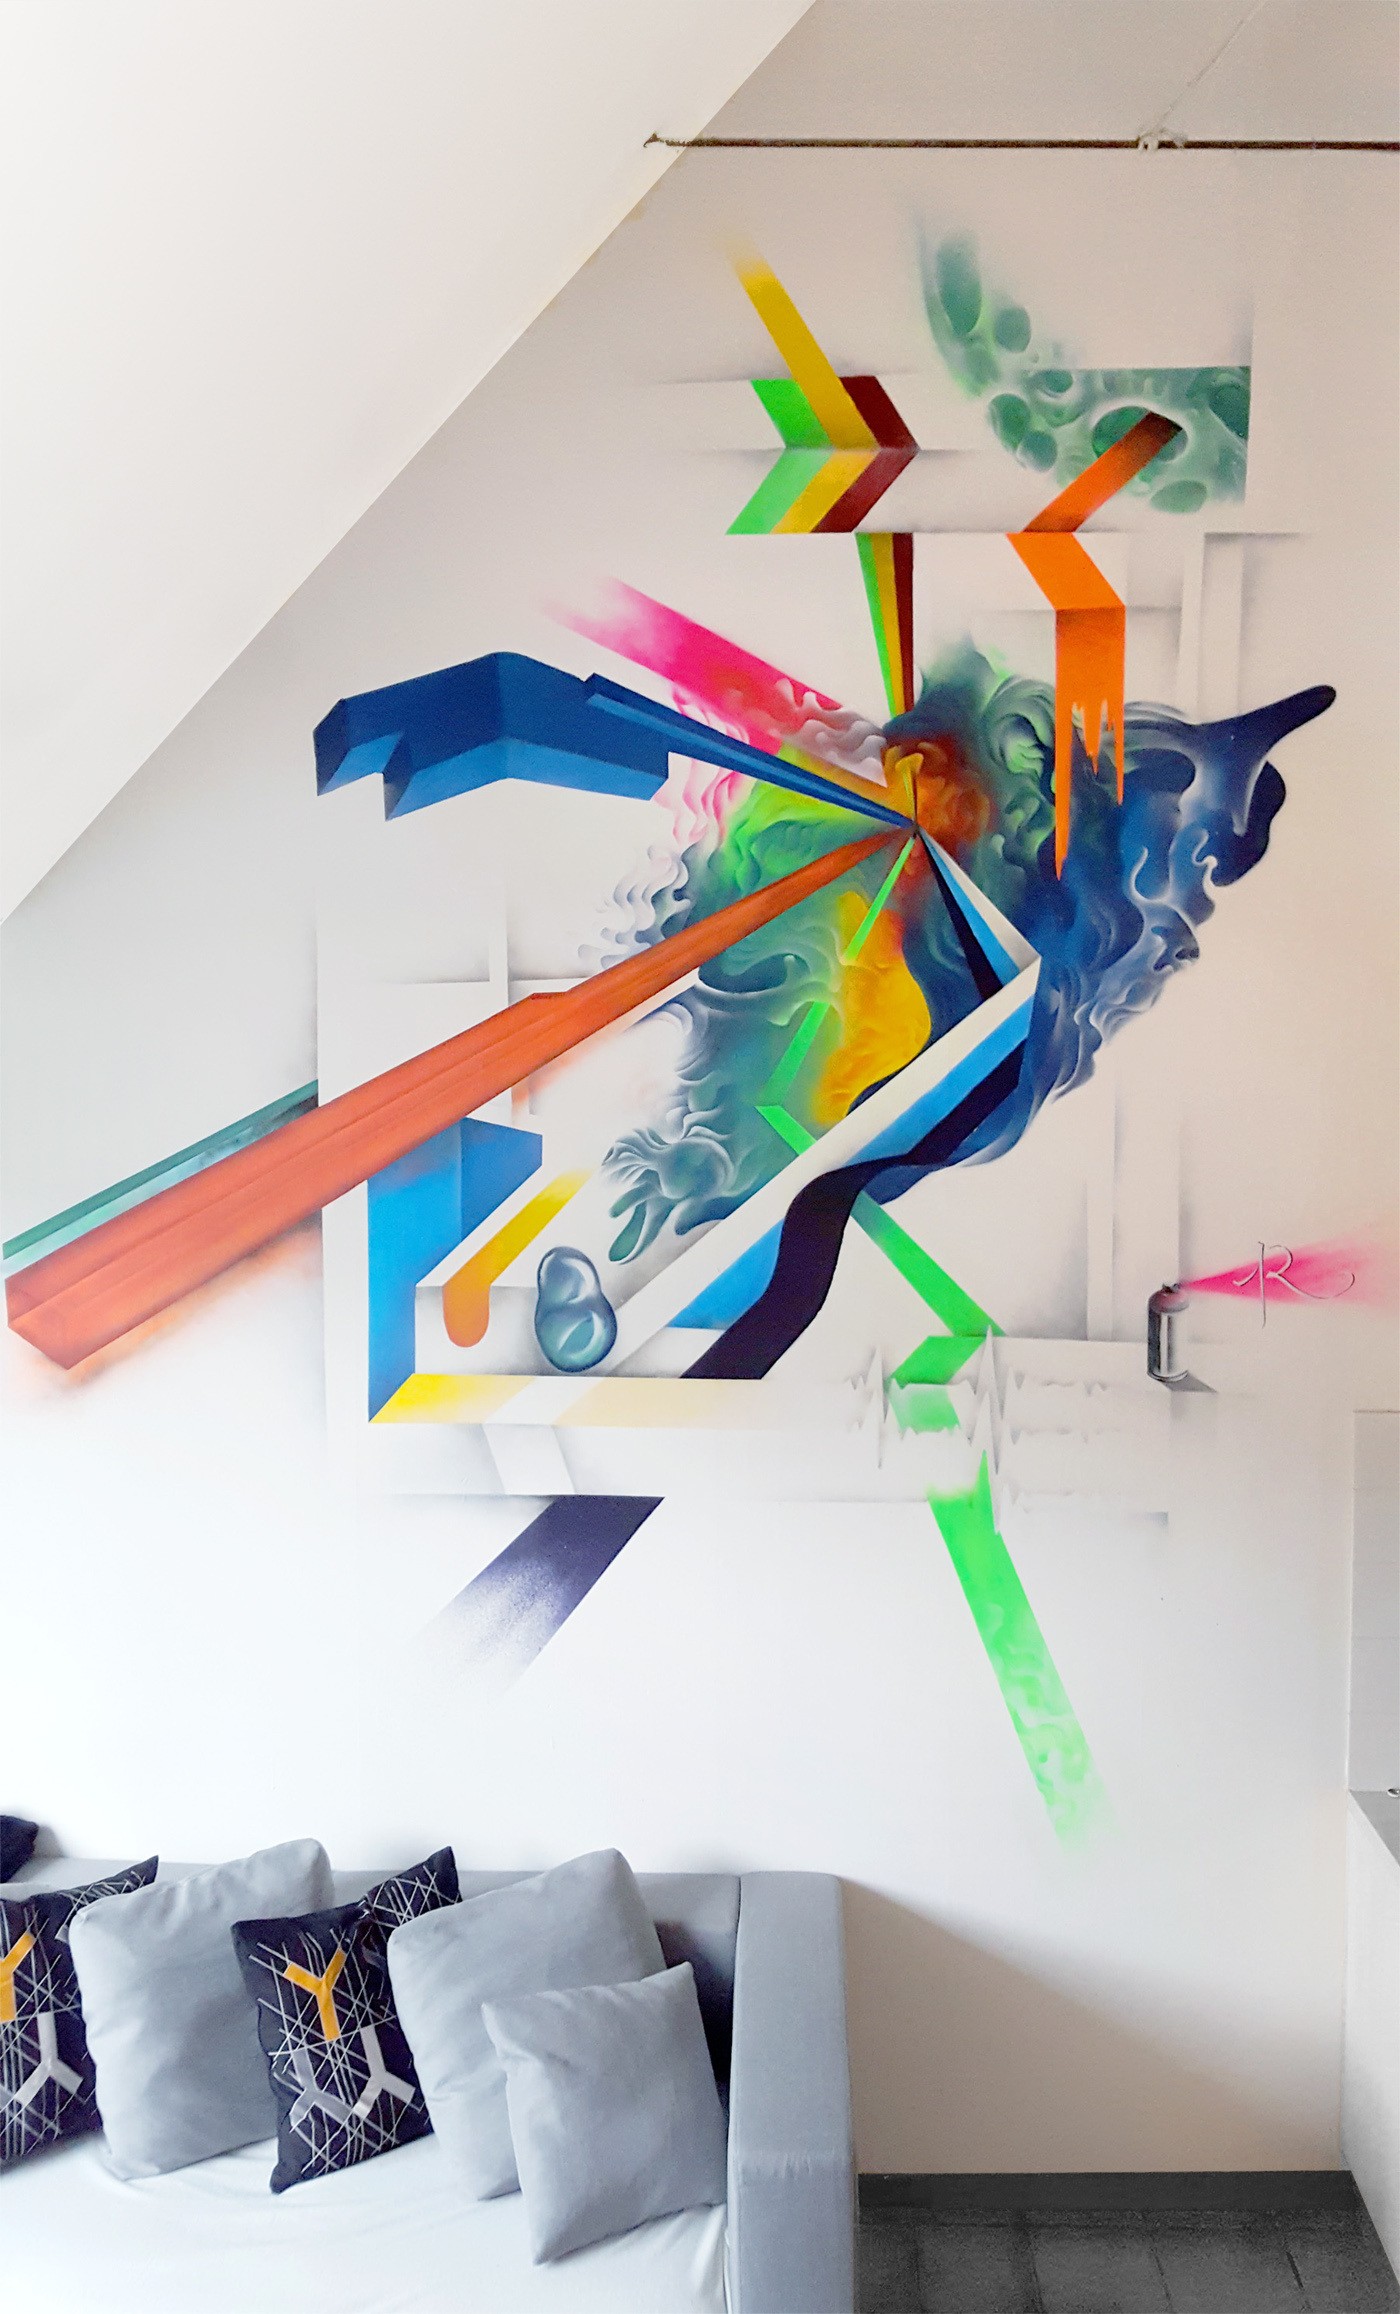 https://propaganza.be/nl/wp-content/uploads/sites/3/2015/09/propaganza-adrien-roubens-abstrait-abstract-urban-artist-graffiti-graff-street-art-spray-paint-painting-peinture-tag-art-ephemere-brussels-bruxelles-2.jpg